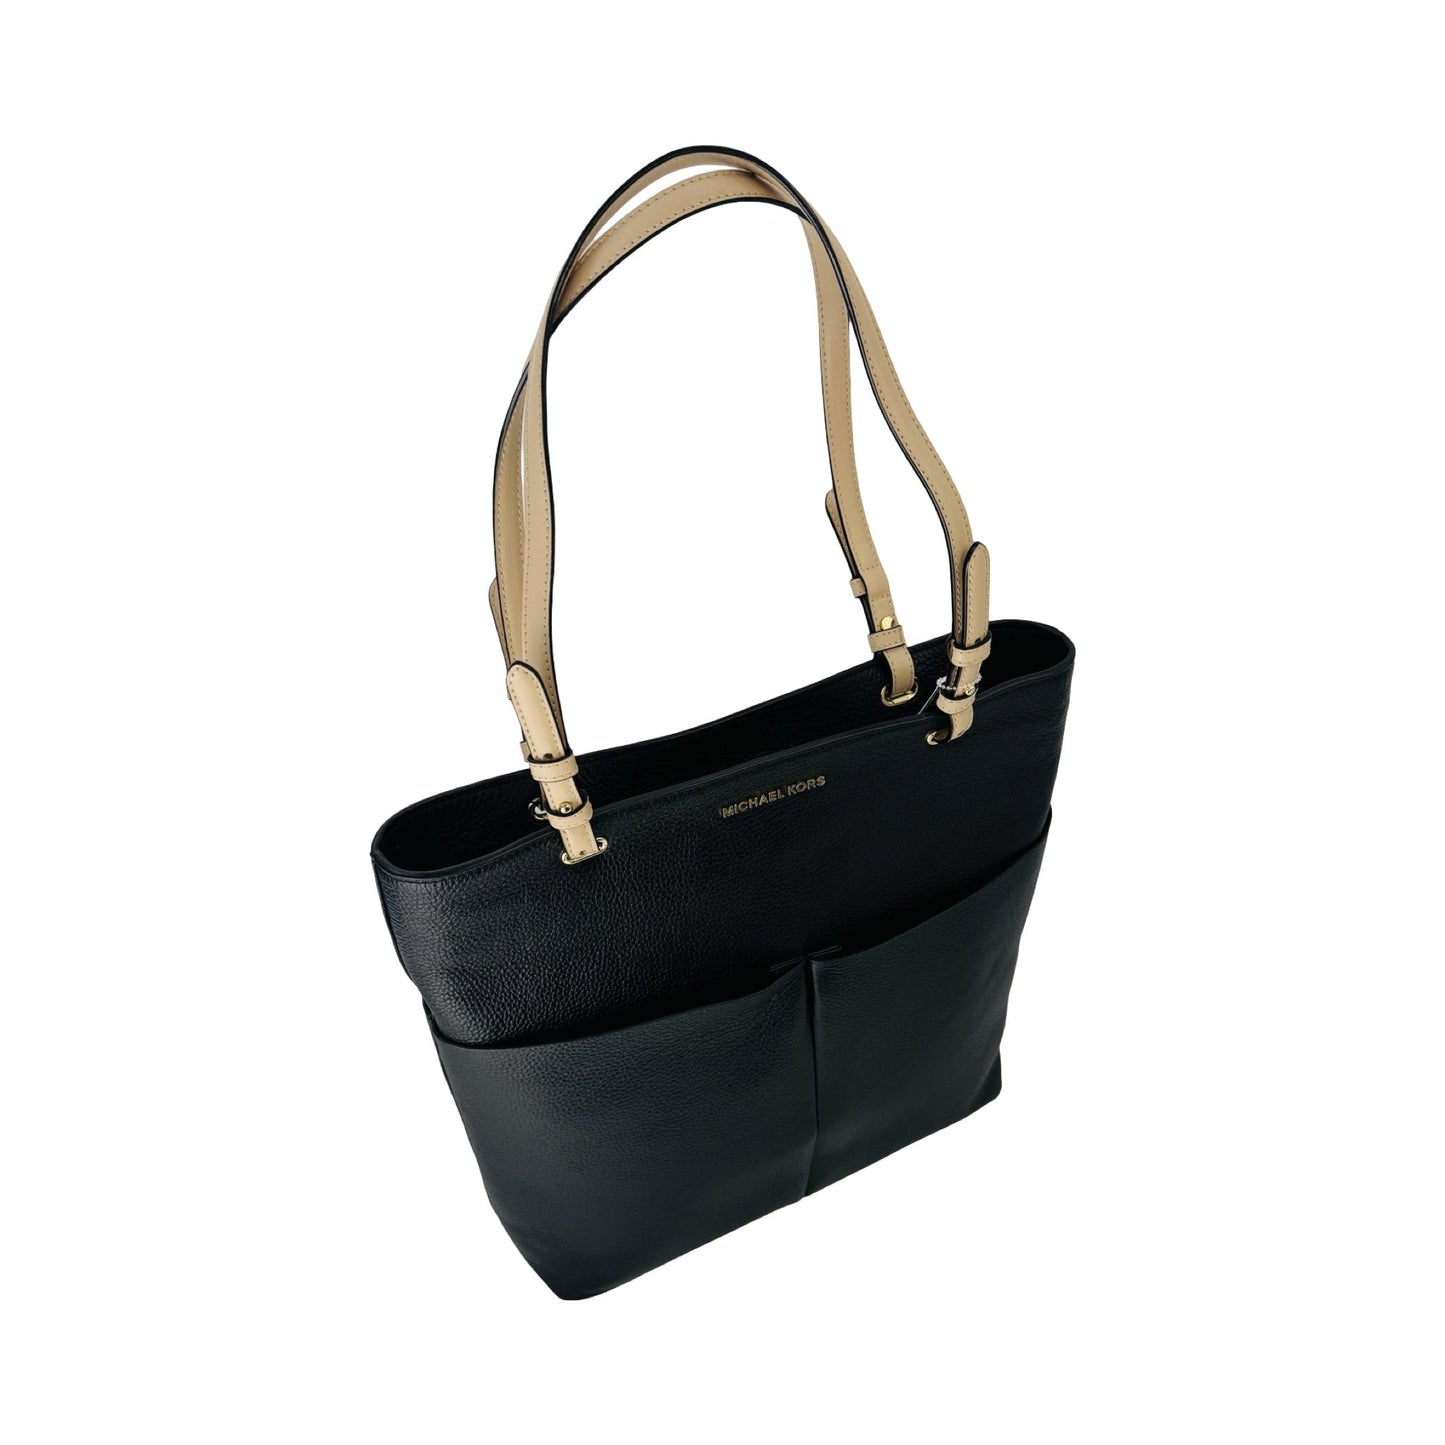 Bedford Leather Dual Beige Handles Gold-Tone Hardware Top-Zip Closure Tote Handbag By Michael Kors  Size: Large